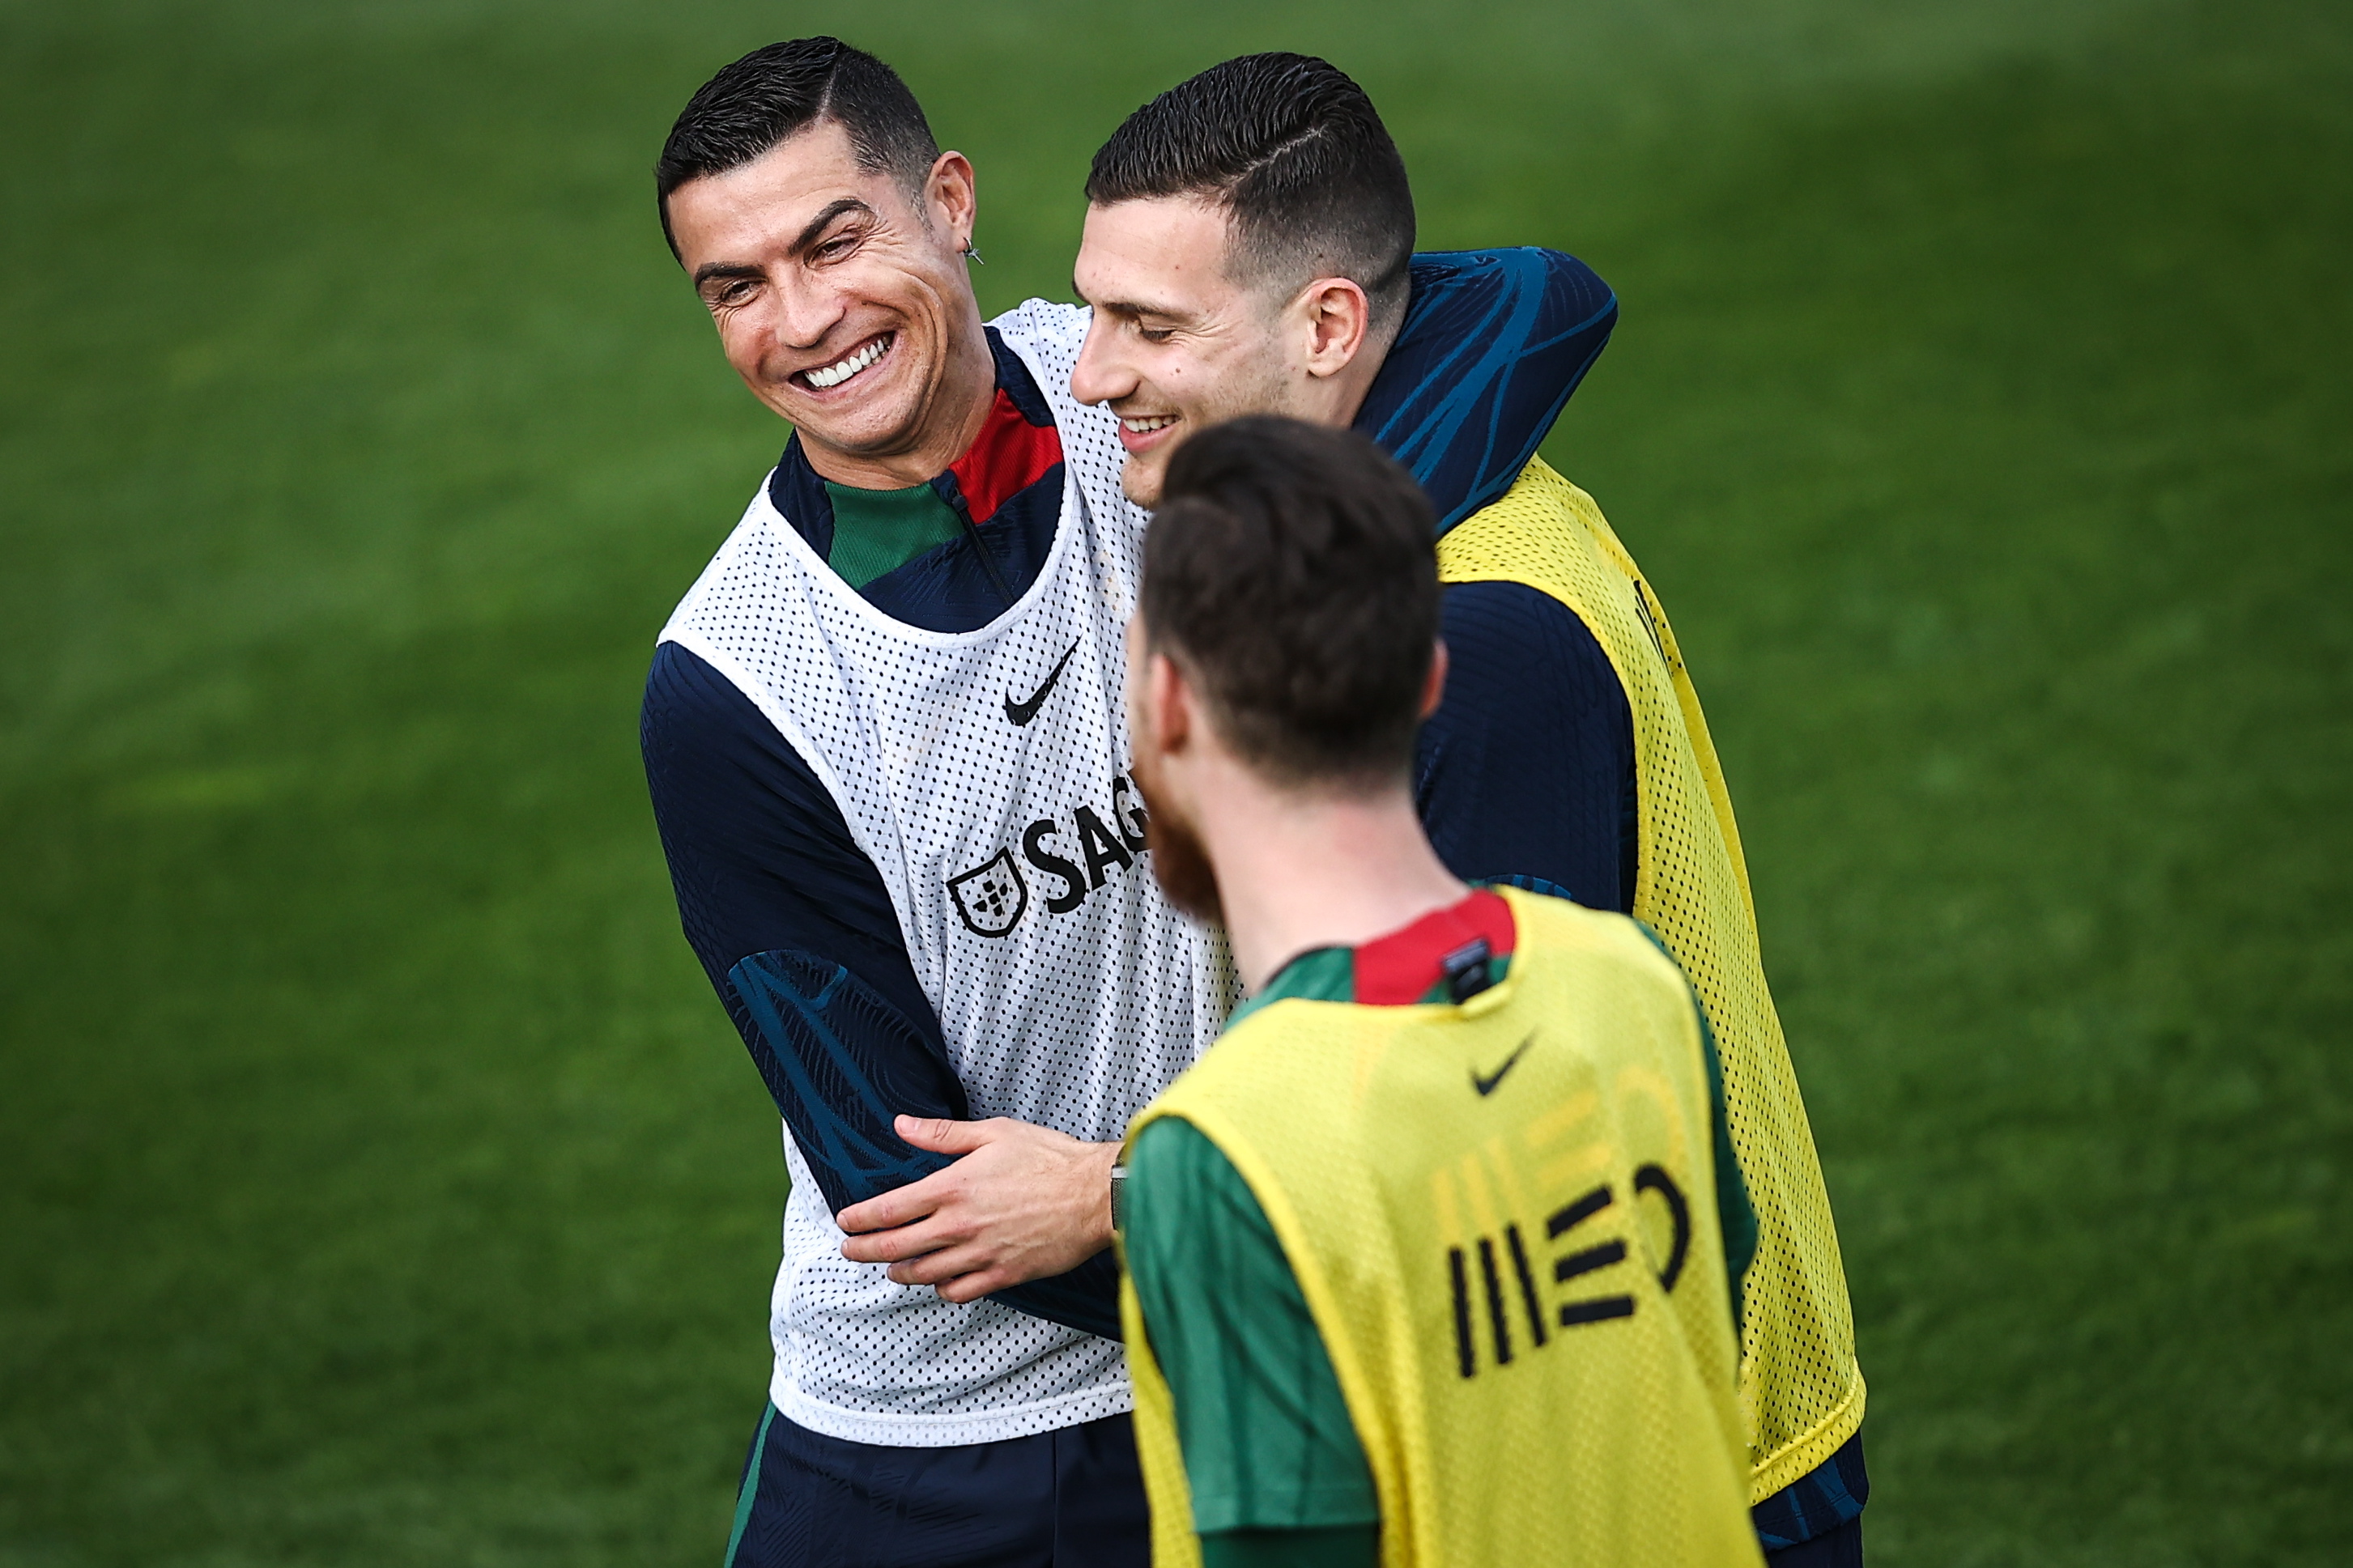 Portugal pals Cristiano Ronaldo and Diogo Dalot are still locked together despite the icon's departure from Man Utd last December